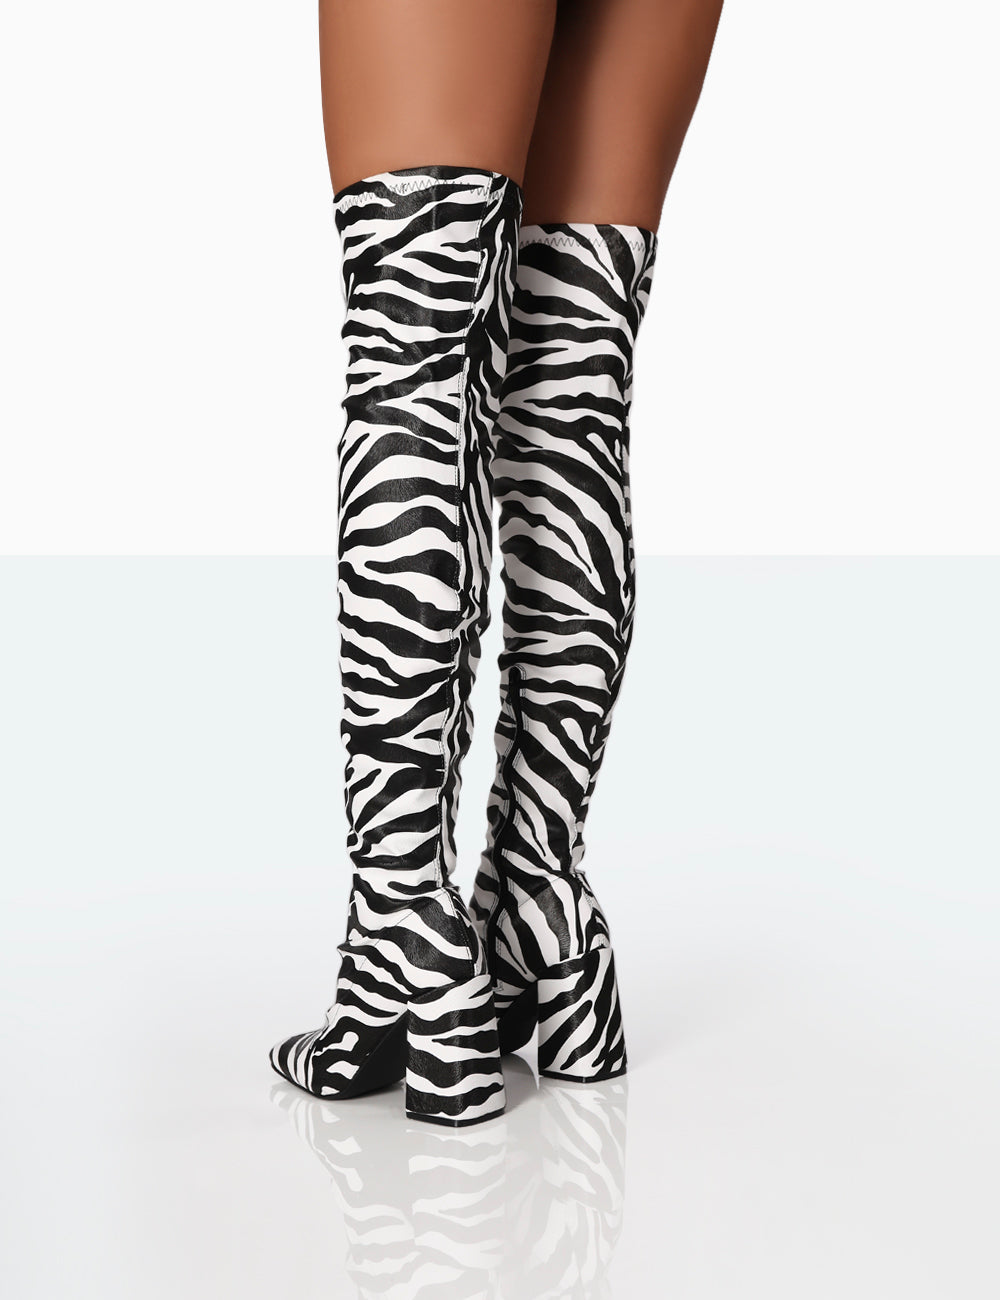 EXTREME FIT Men Small/Medium Women Zebra Design Knee High